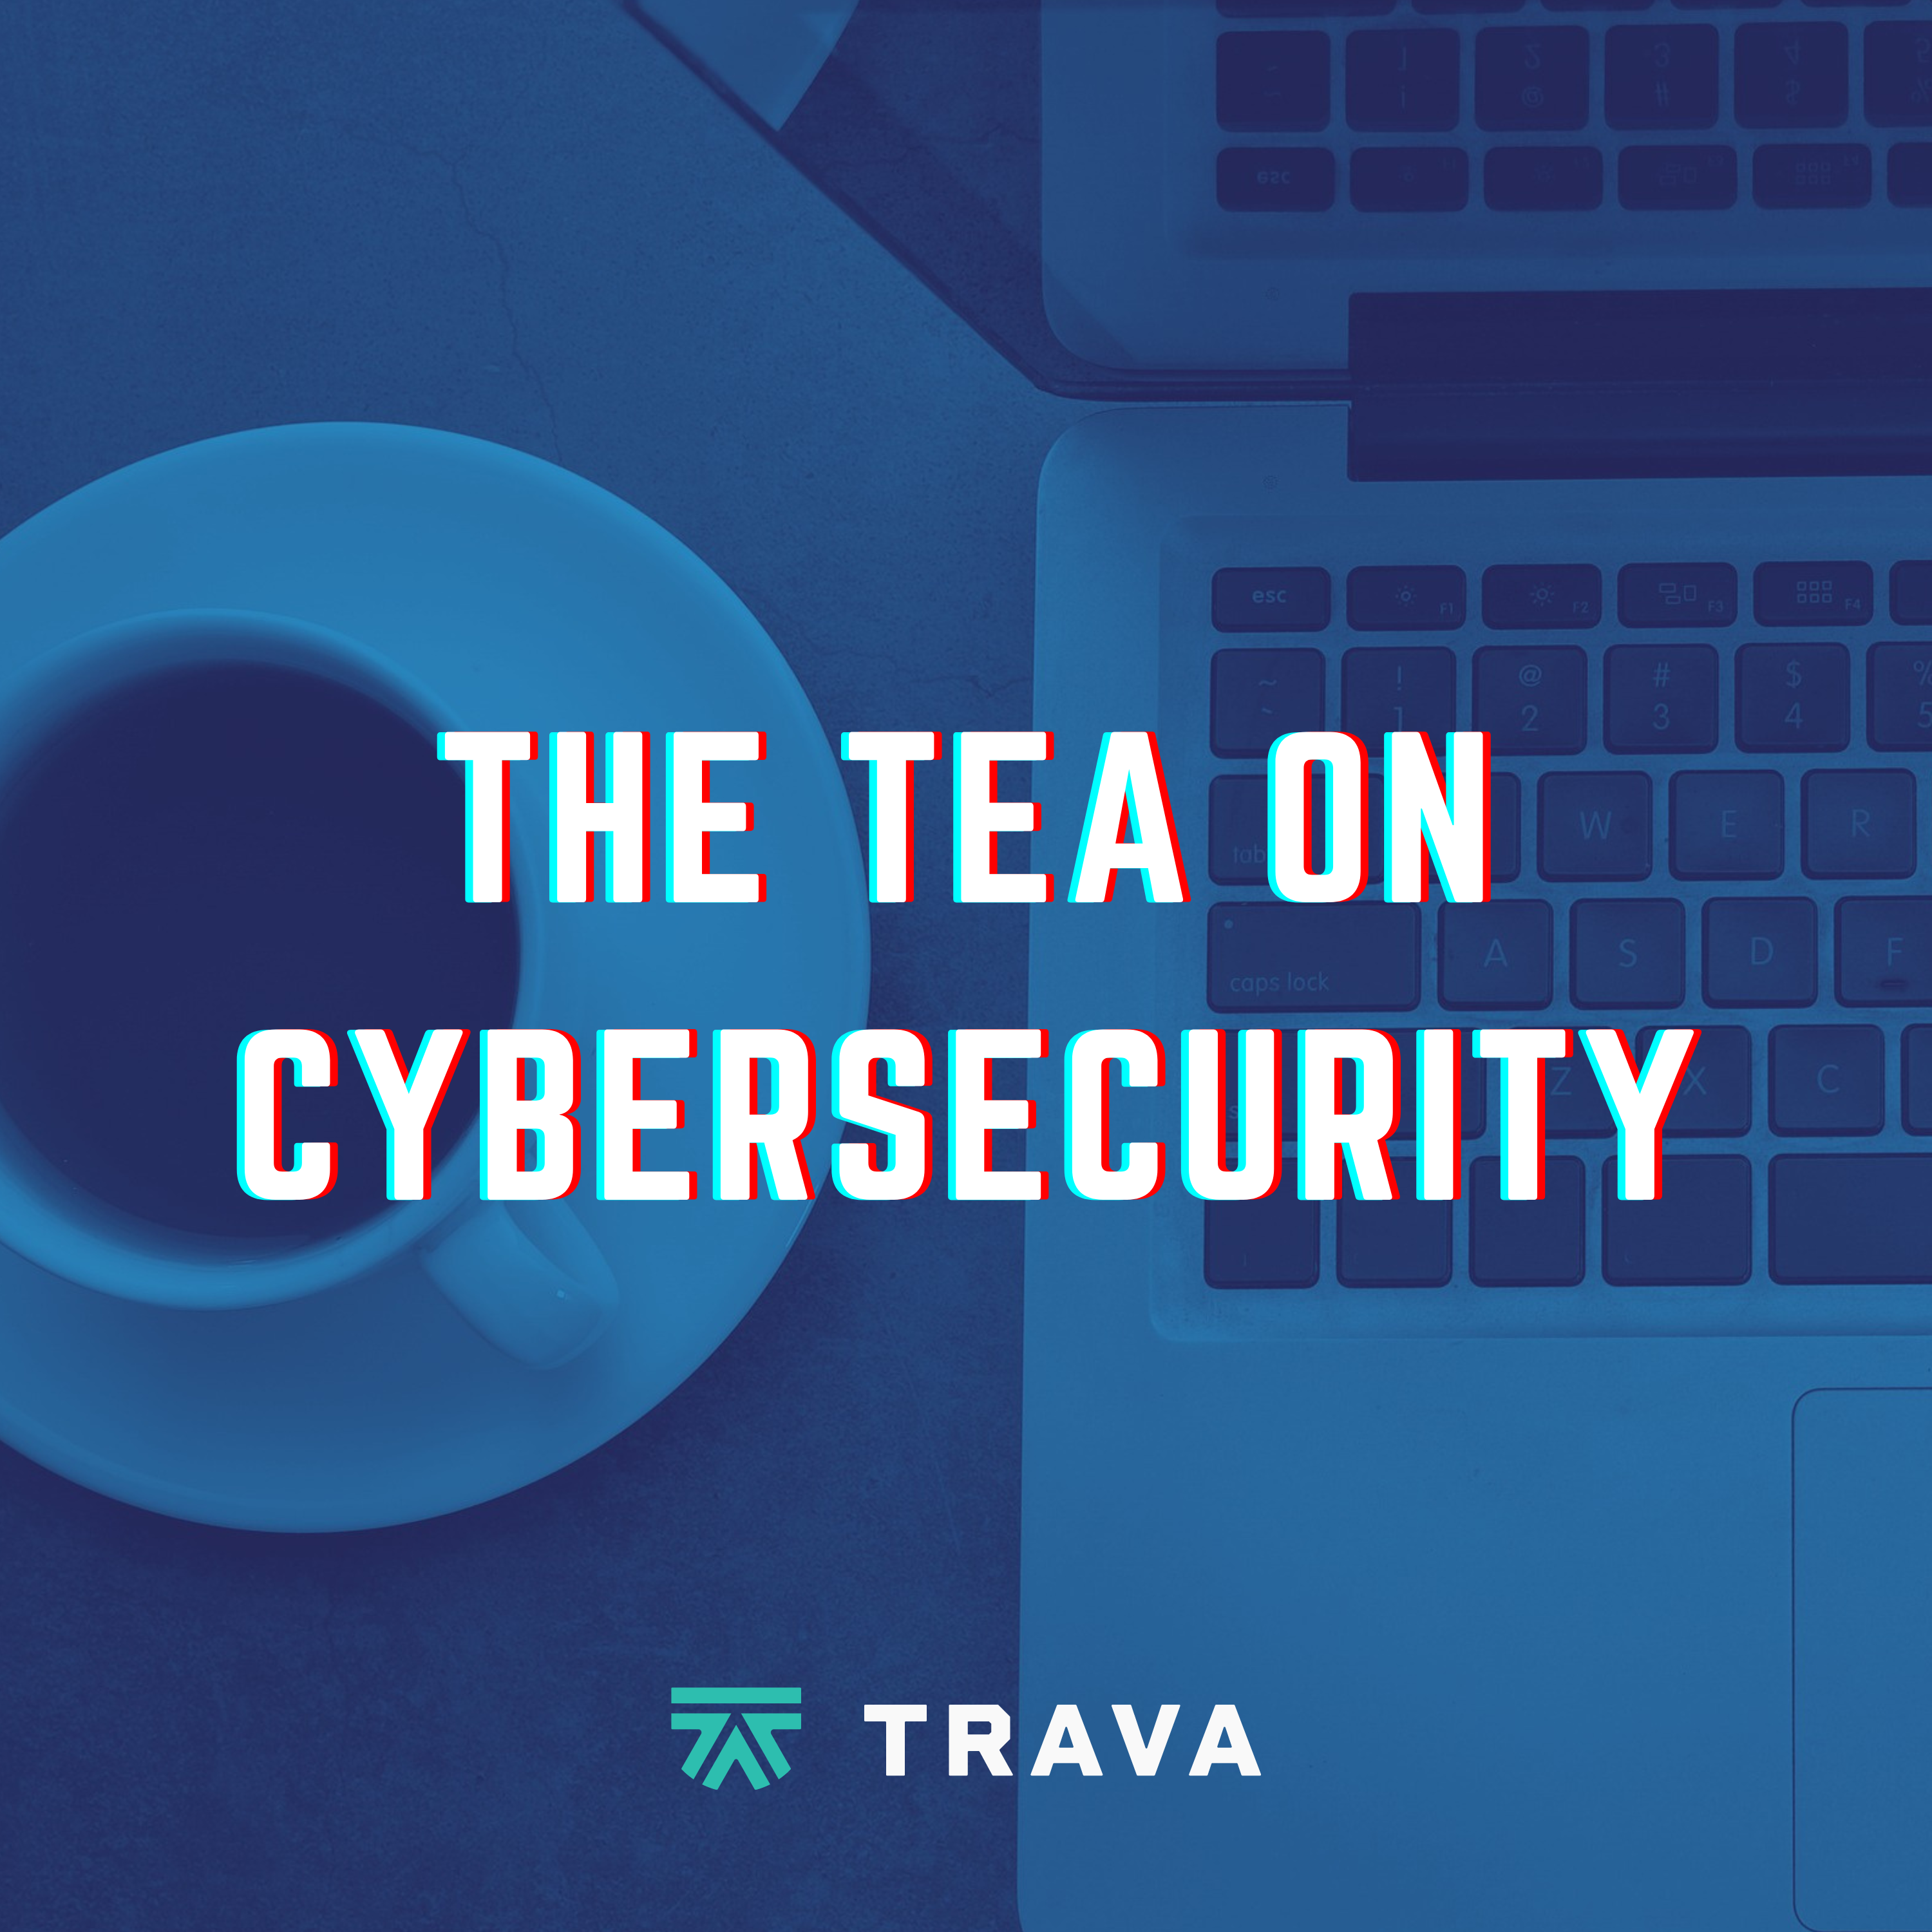 Introducing Season 3 of The Tea on Cybersecurity